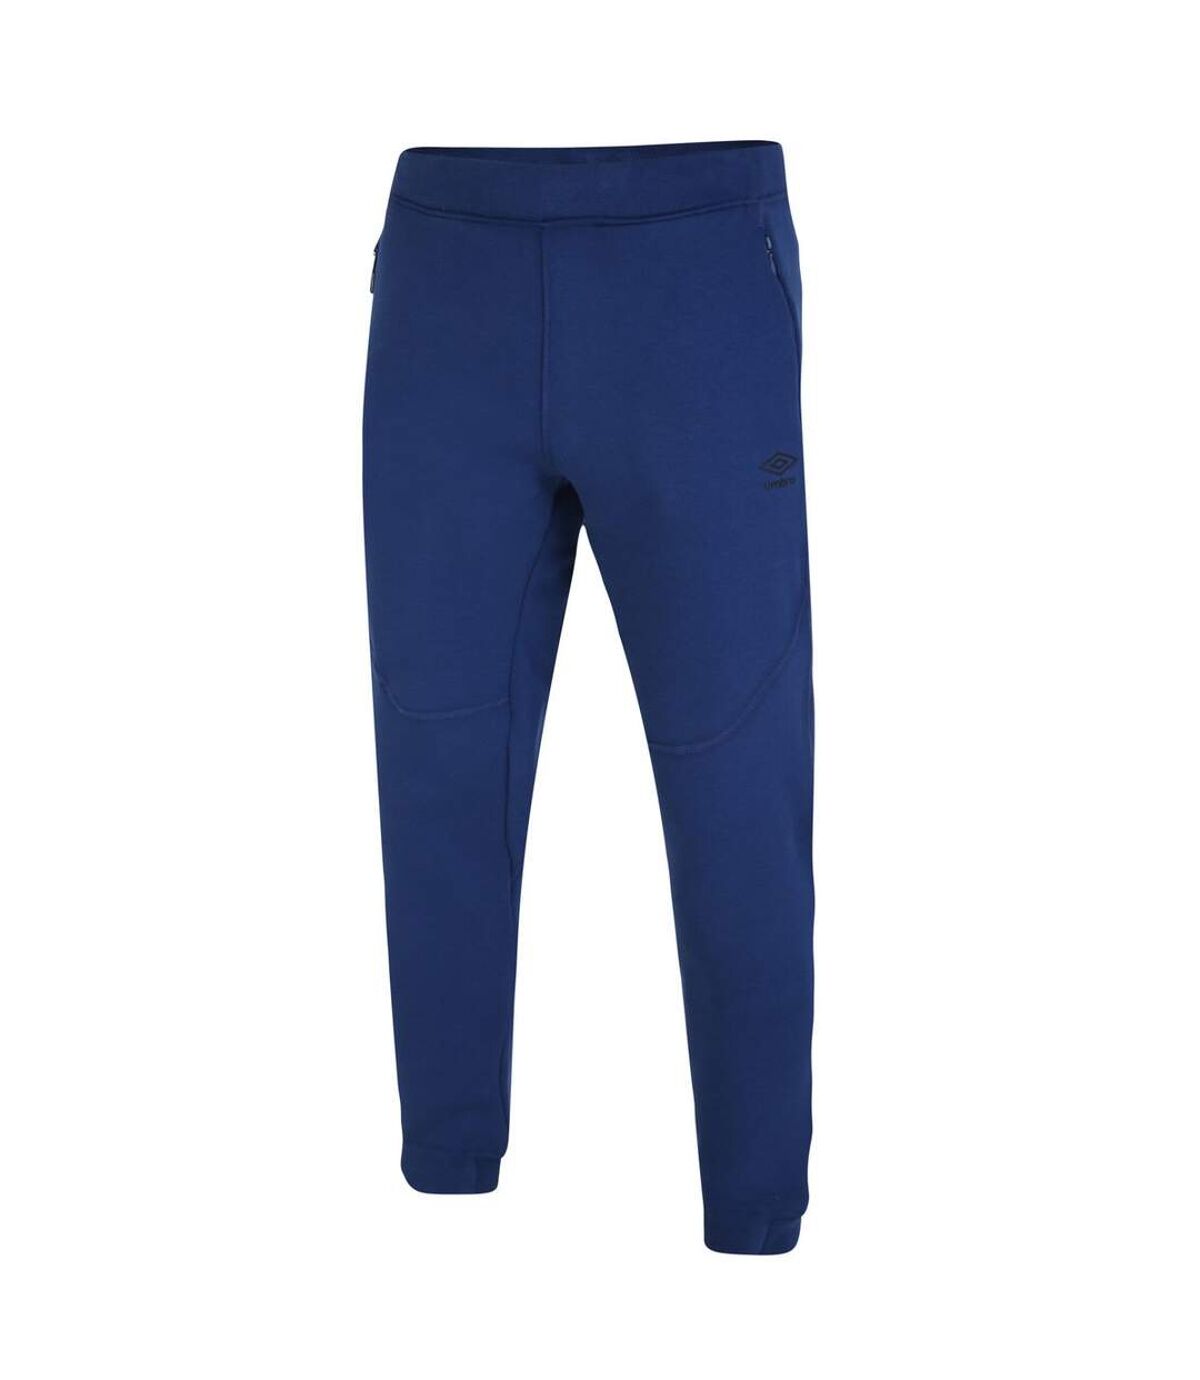 Umbro - Pantalon de jogging PRO ELITE - Homme (Bleu marine) - UTUO143